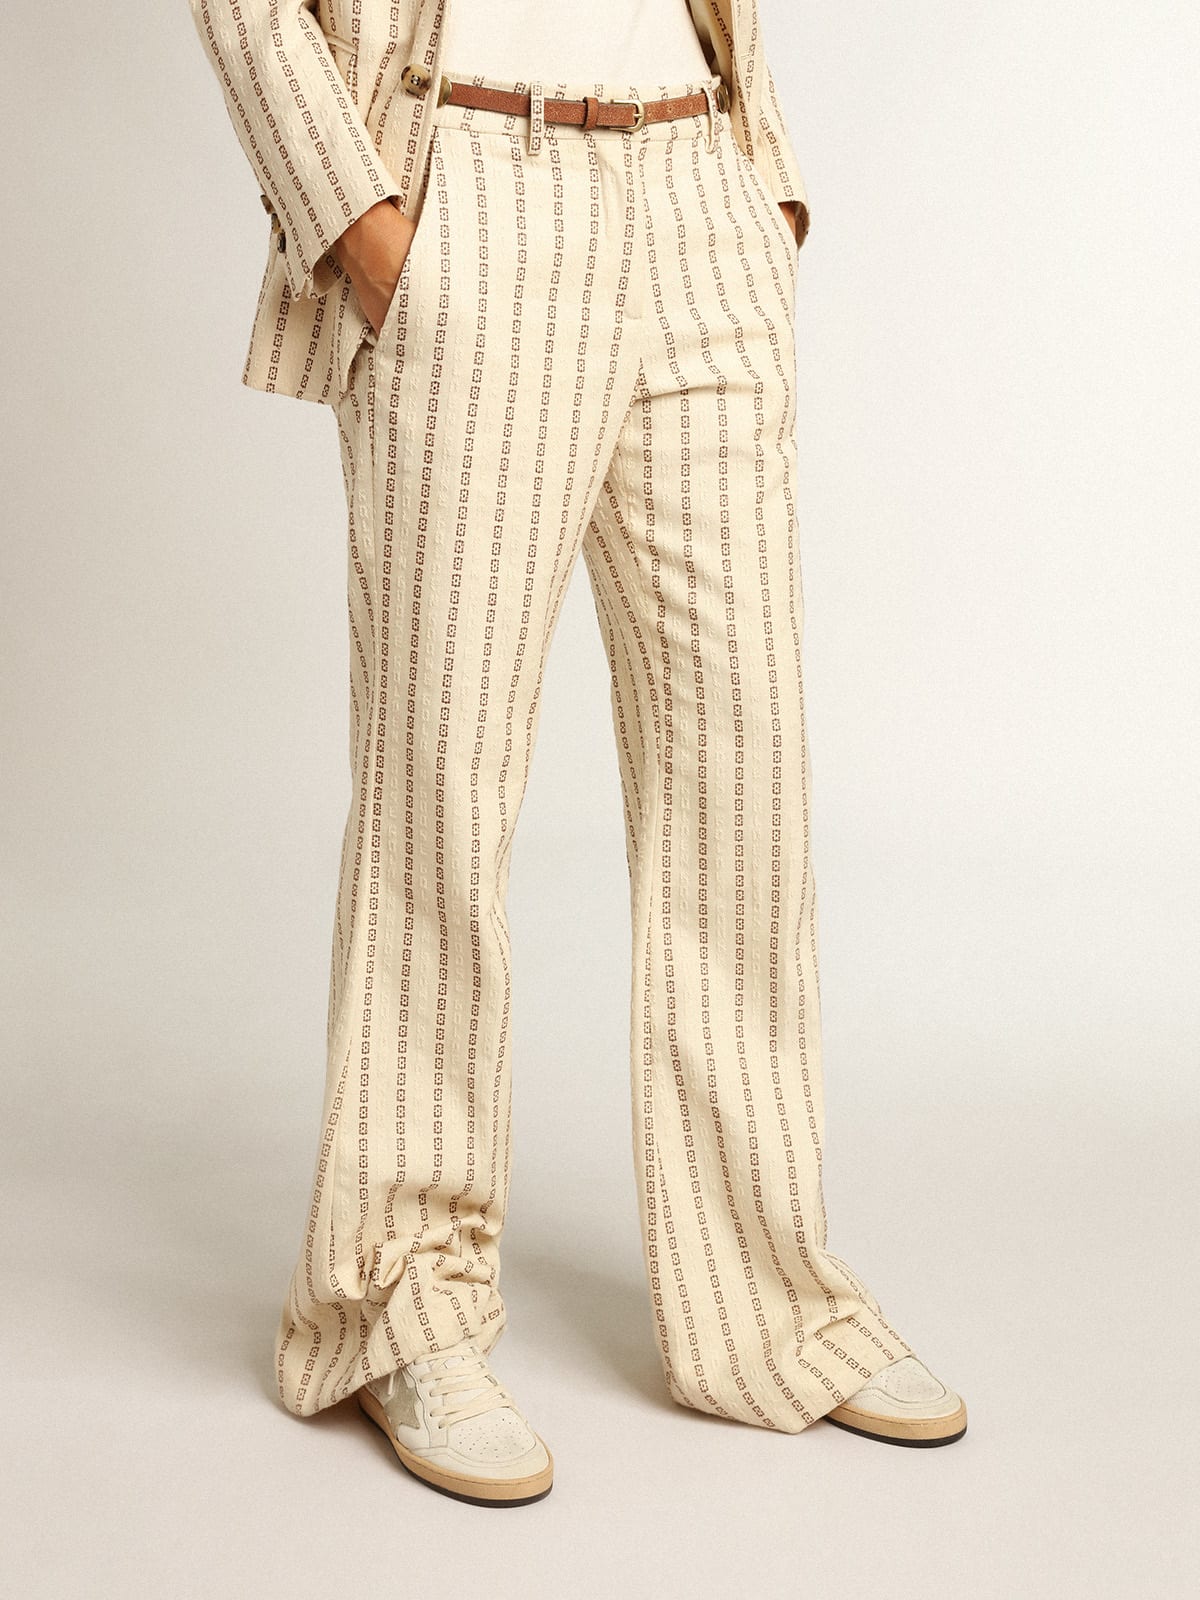 Cream-colored cotton pants with jacquard motif